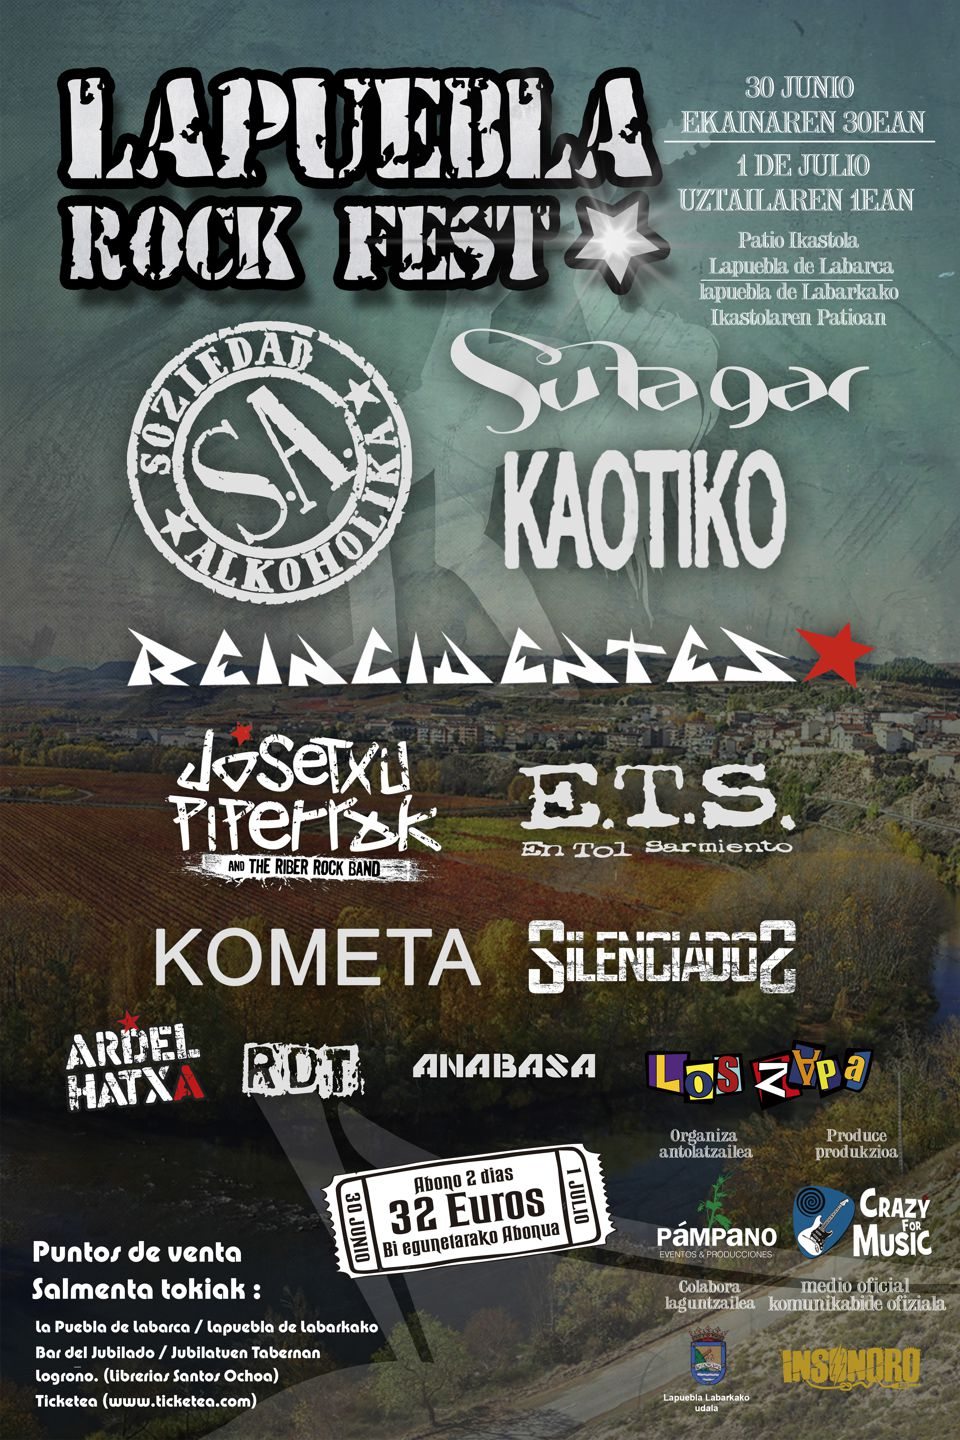 Lapuebla Rock Fest 2017